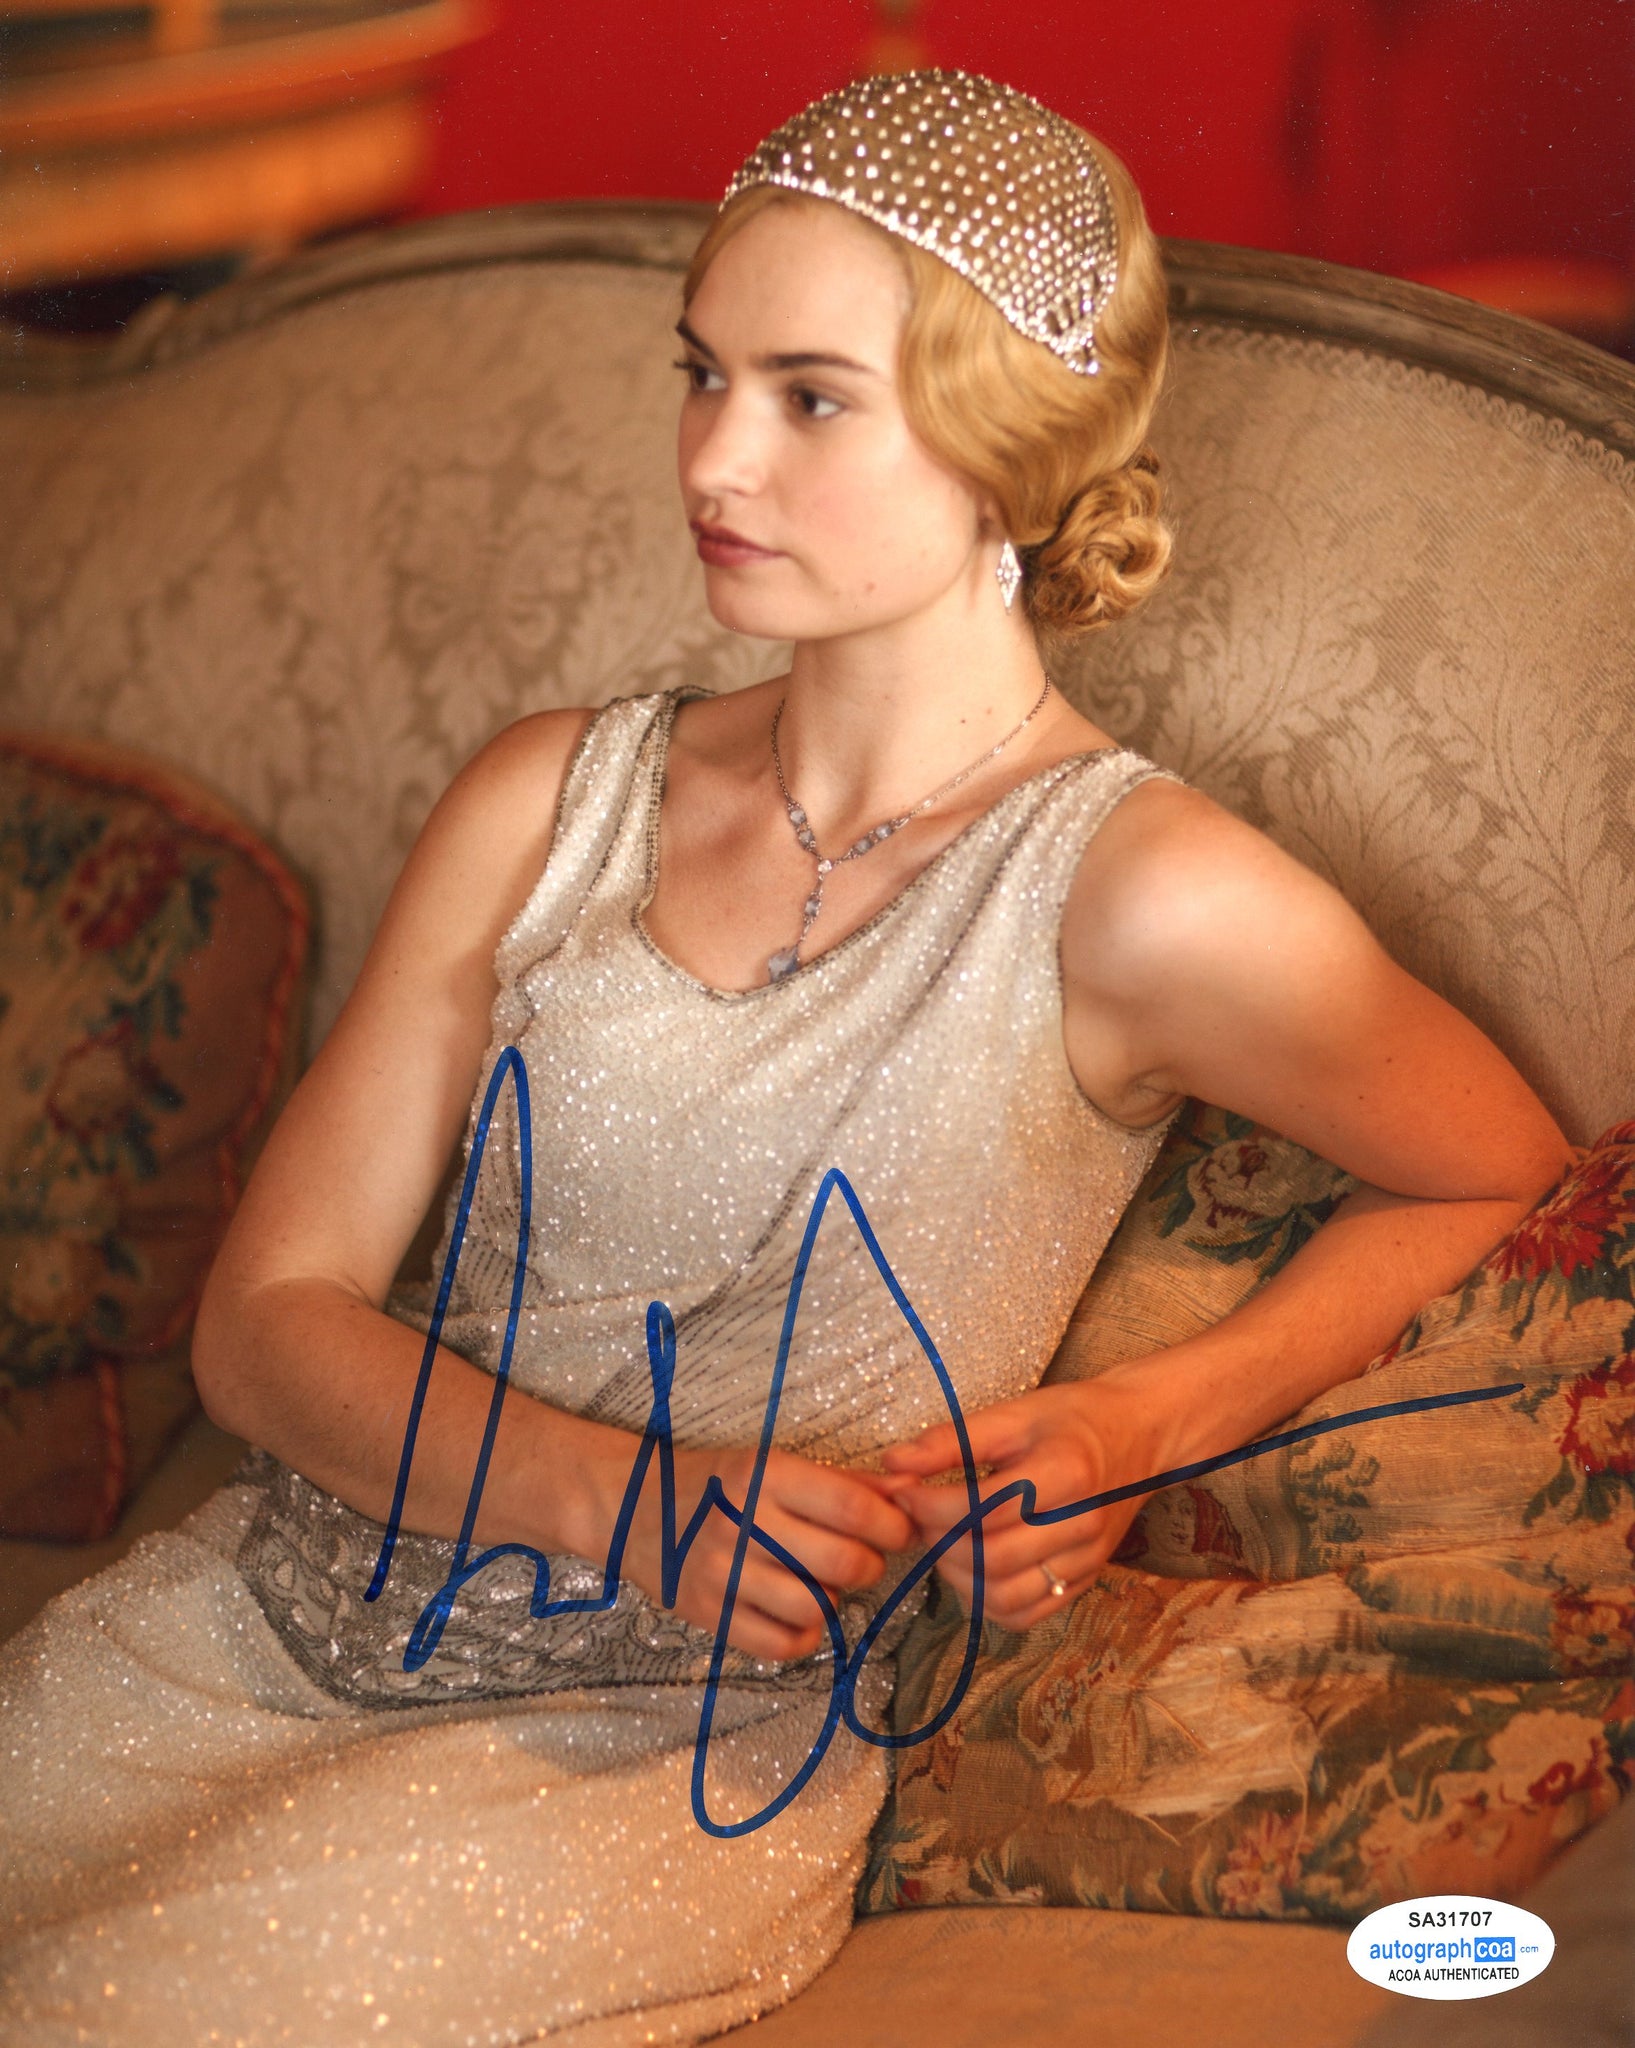 Lily James Downton Abbey Signed Autograph 8x10 Photo ACOA #28 - Outlaw Hobbies Authentic Autographs